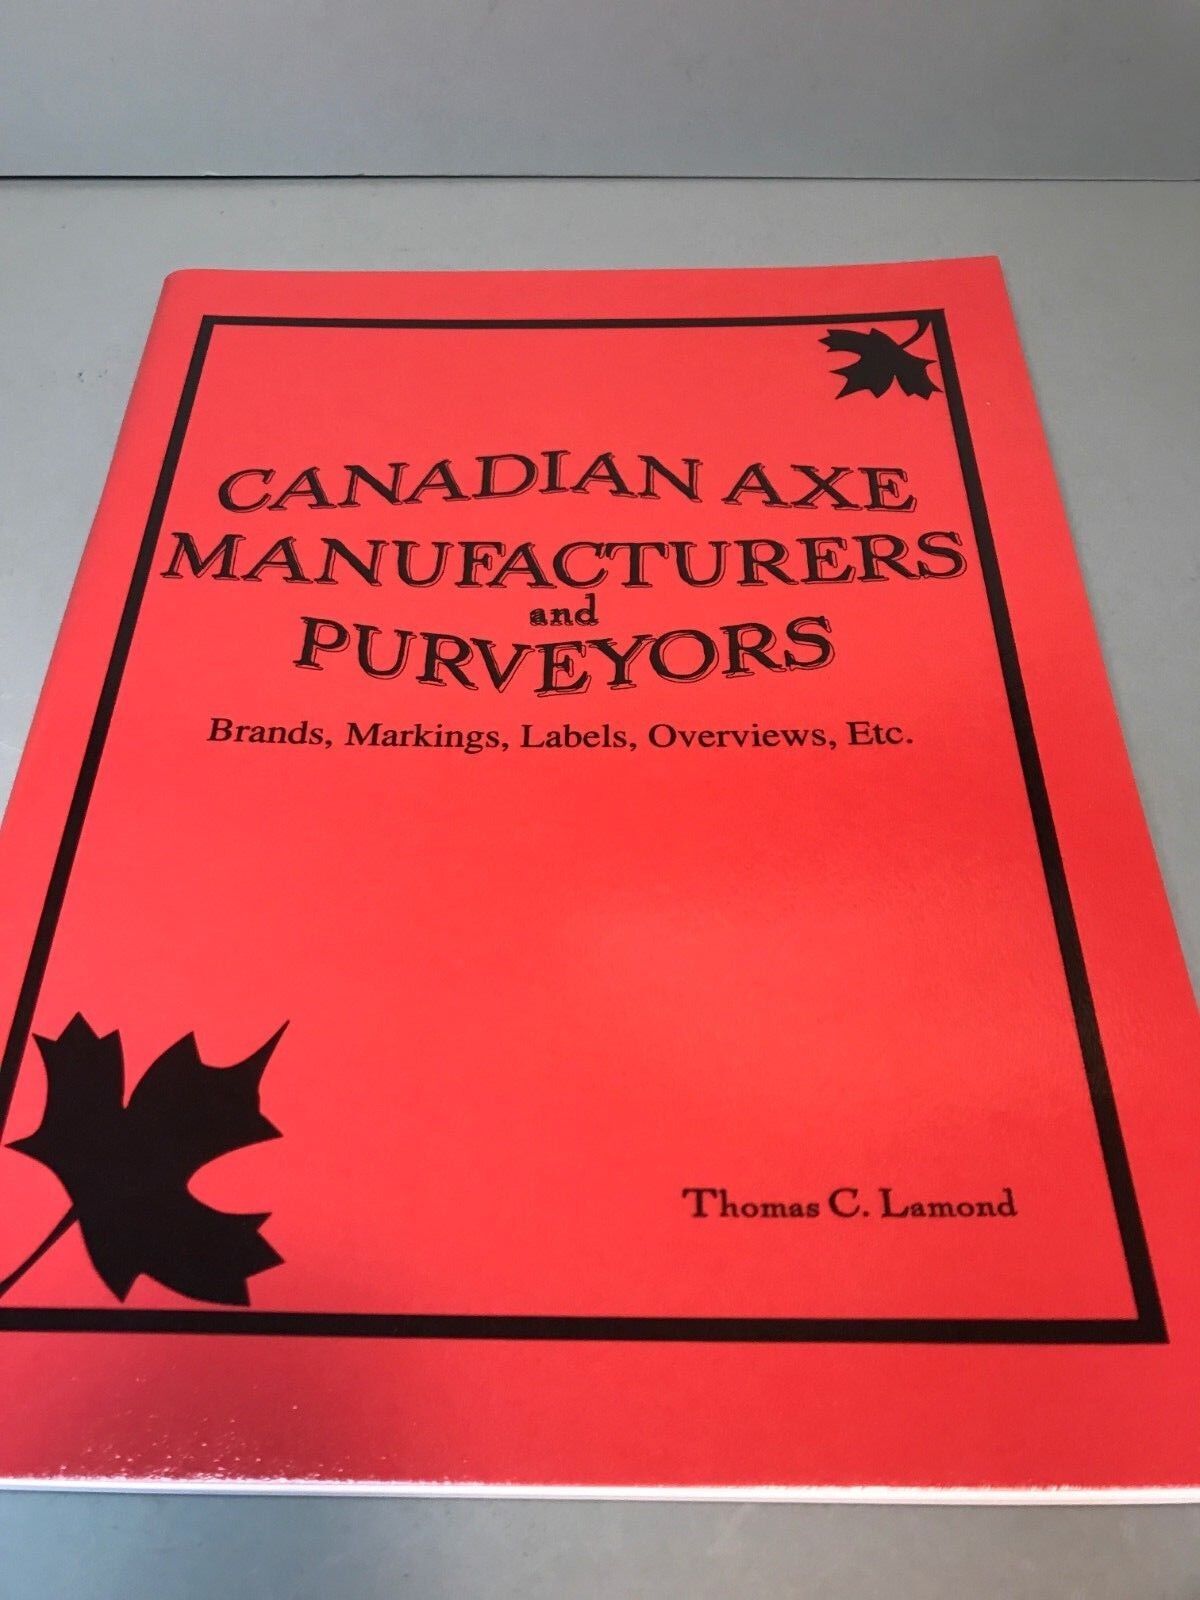 CANADIAN AXE MANUFACTURERS & PURVEYORS BY THOMAS LAMOND